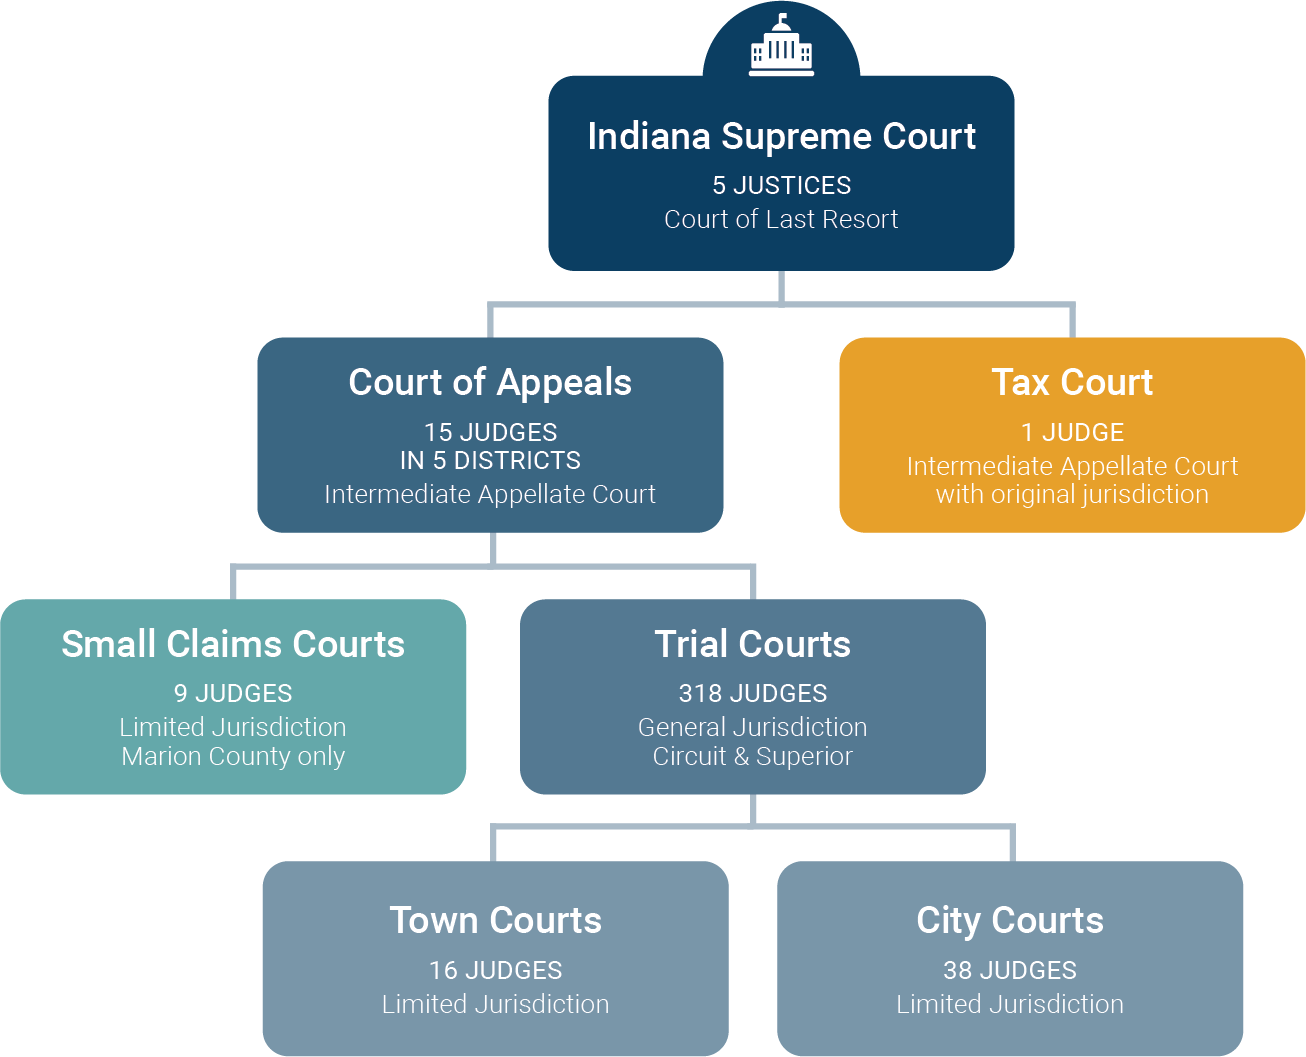 Indian Jurisdiction Chart